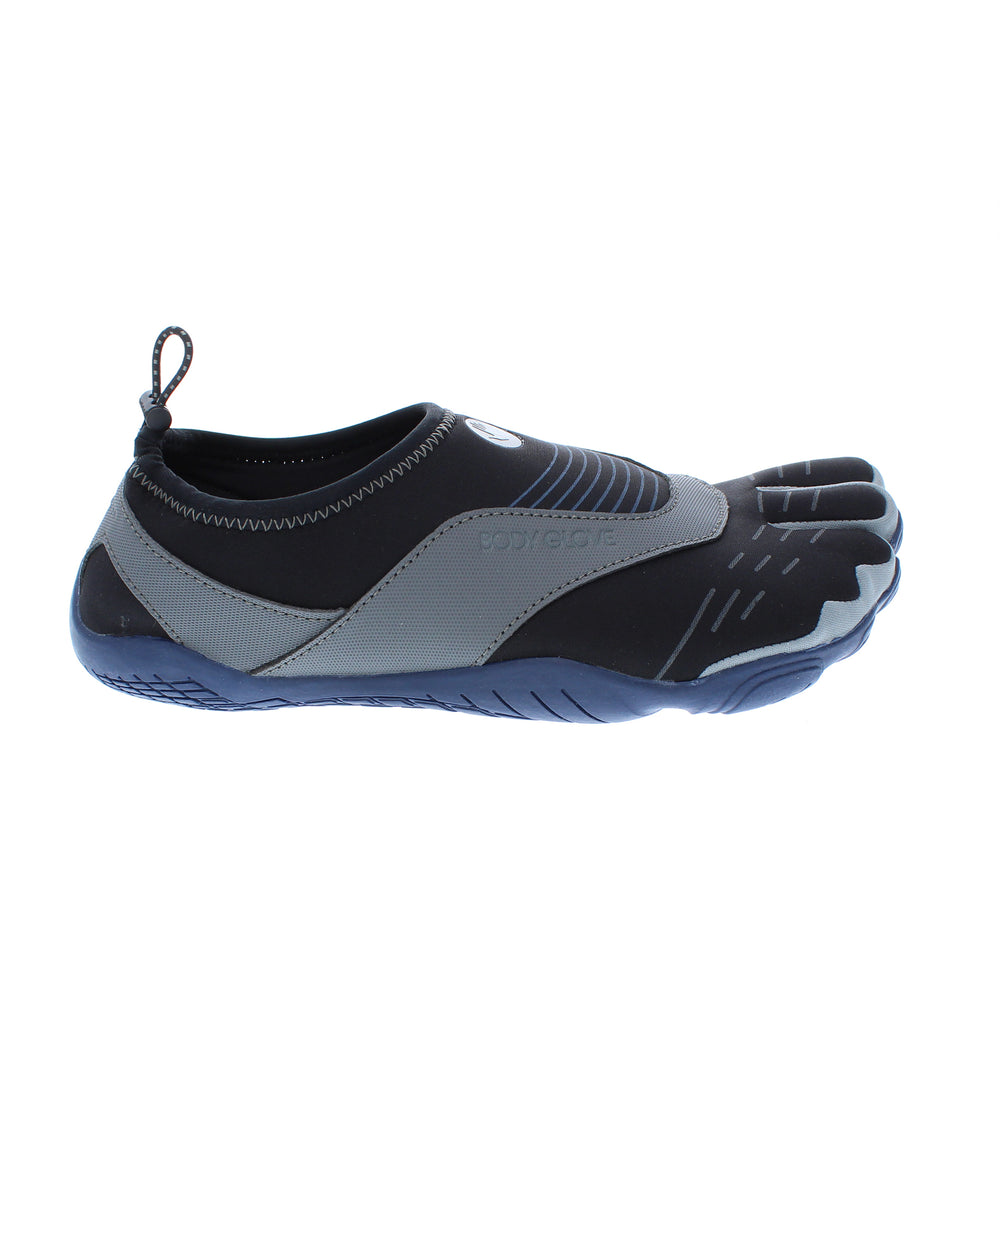 Men's 3T Barefoot Cinch Water Shoes - Black/Indigo